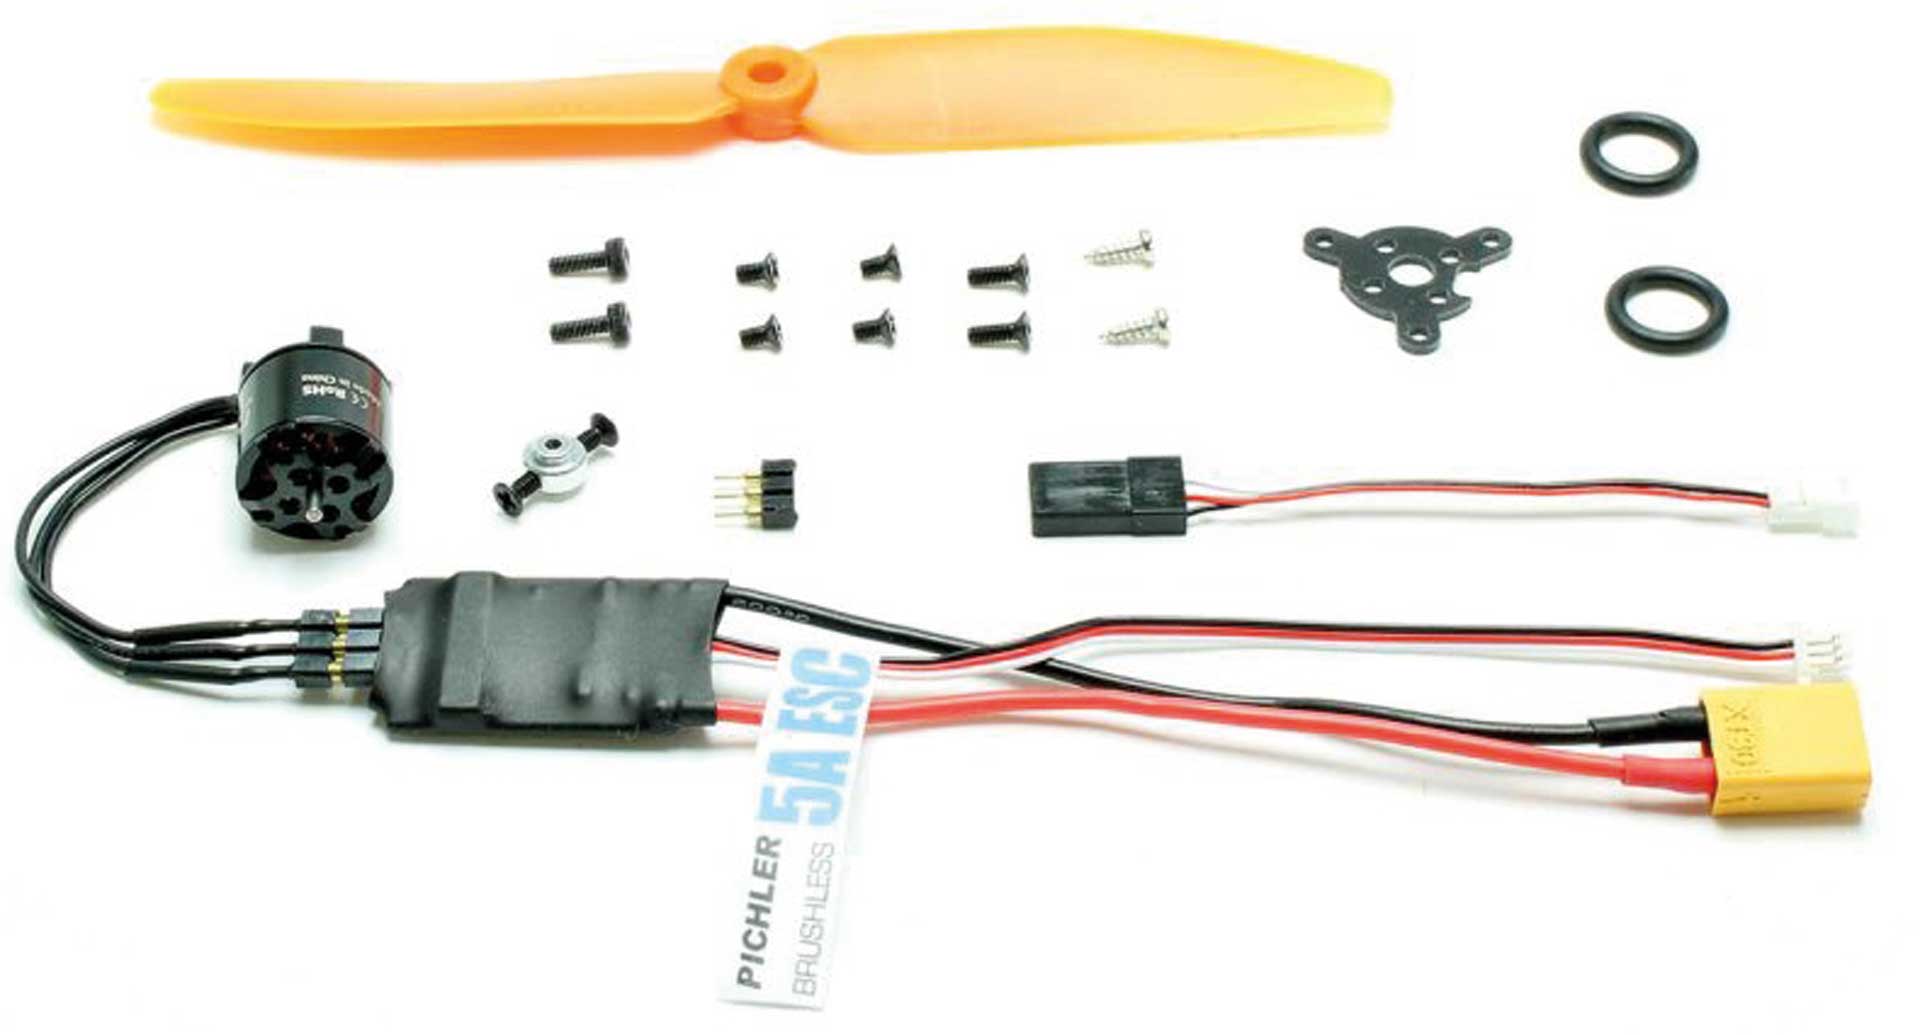 PICHLER Micro Sinbad drive kit